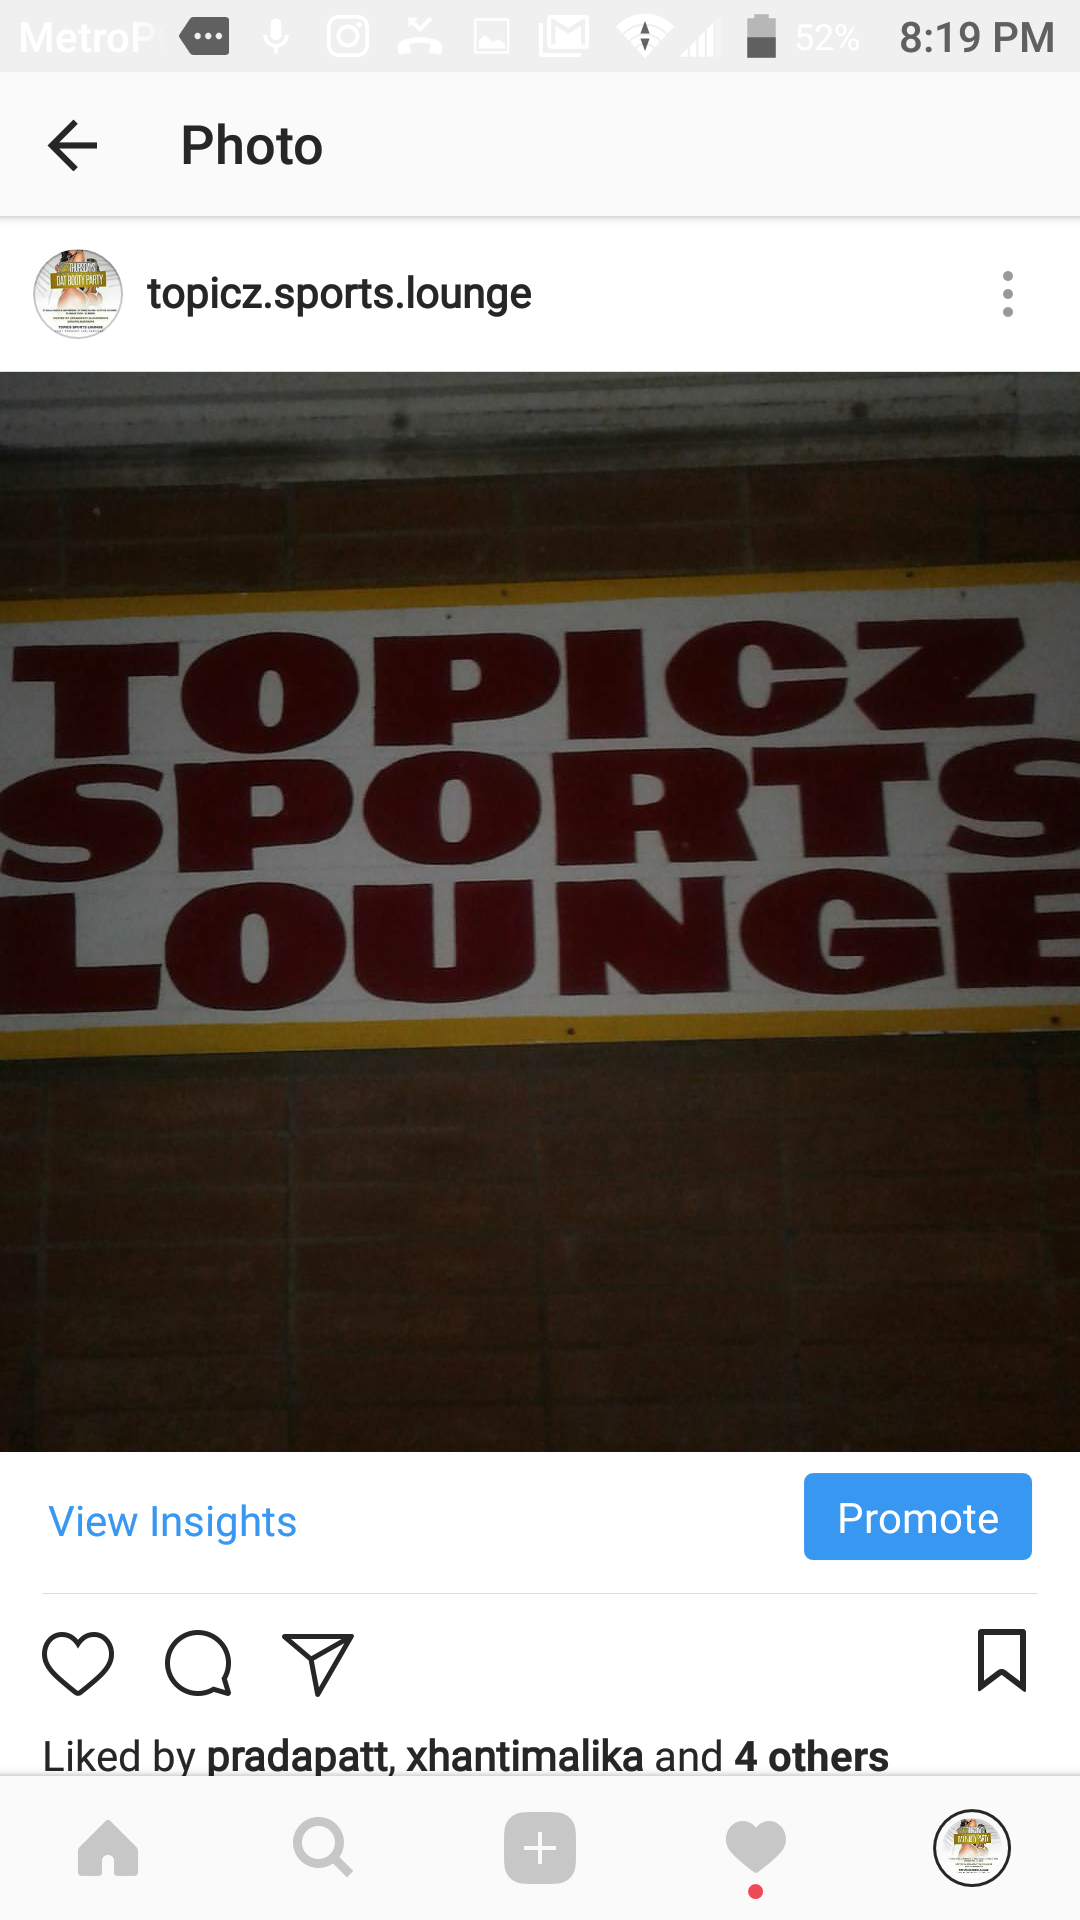 Topicz Sports Lounge